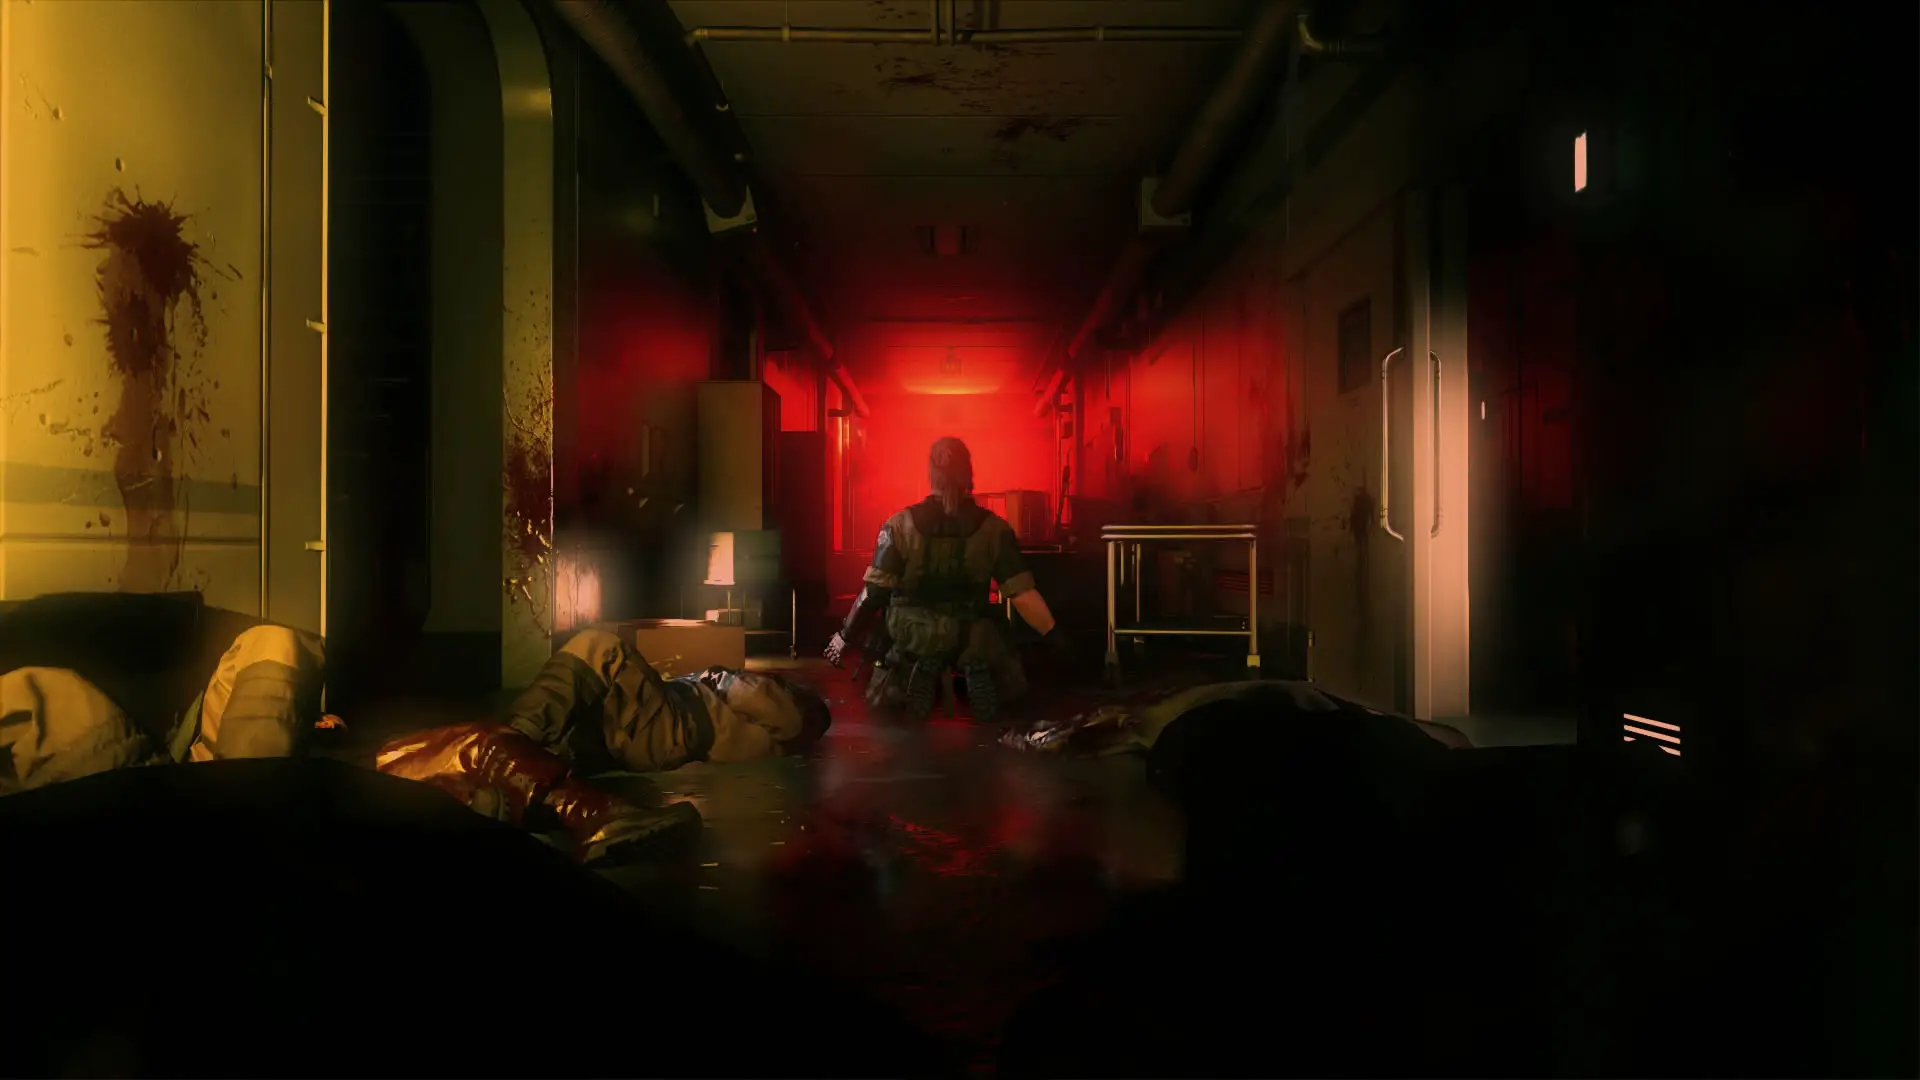 Metal-Gear-Solid-V-The-Phantom-Pain-E3-2015-Screen-Big-Boss-Hallway